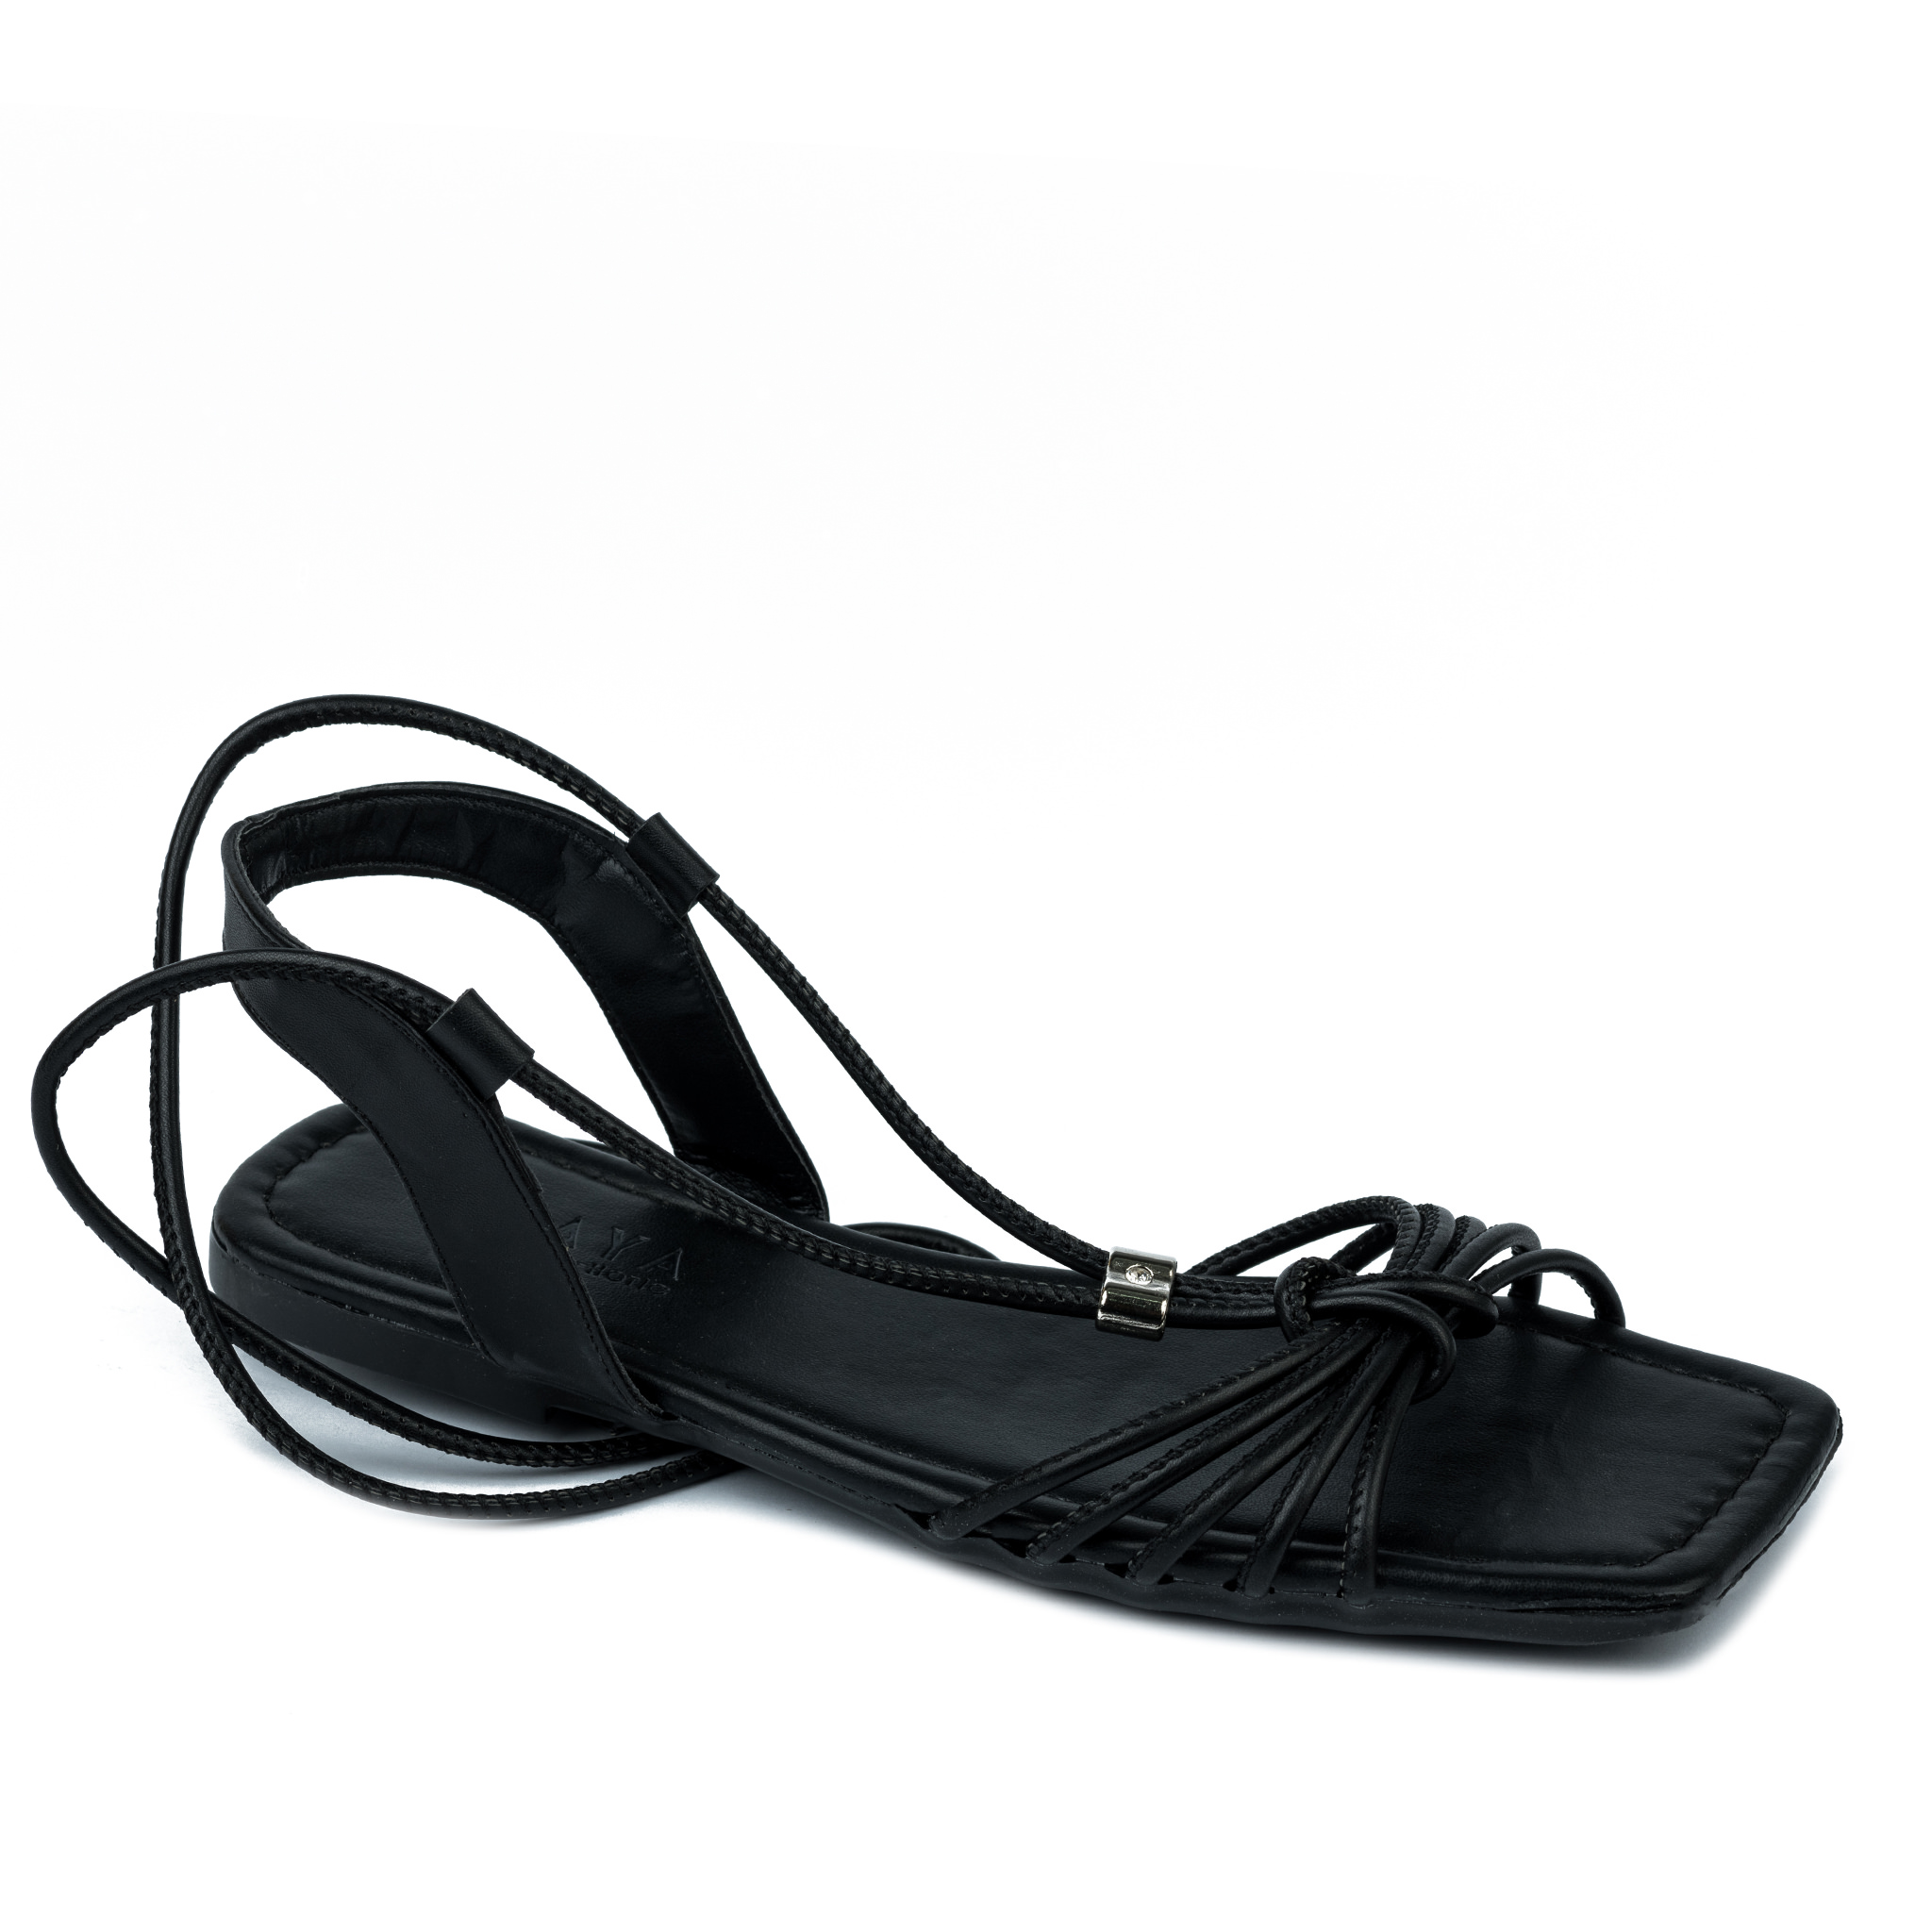 Women sandals A525 - BLACK